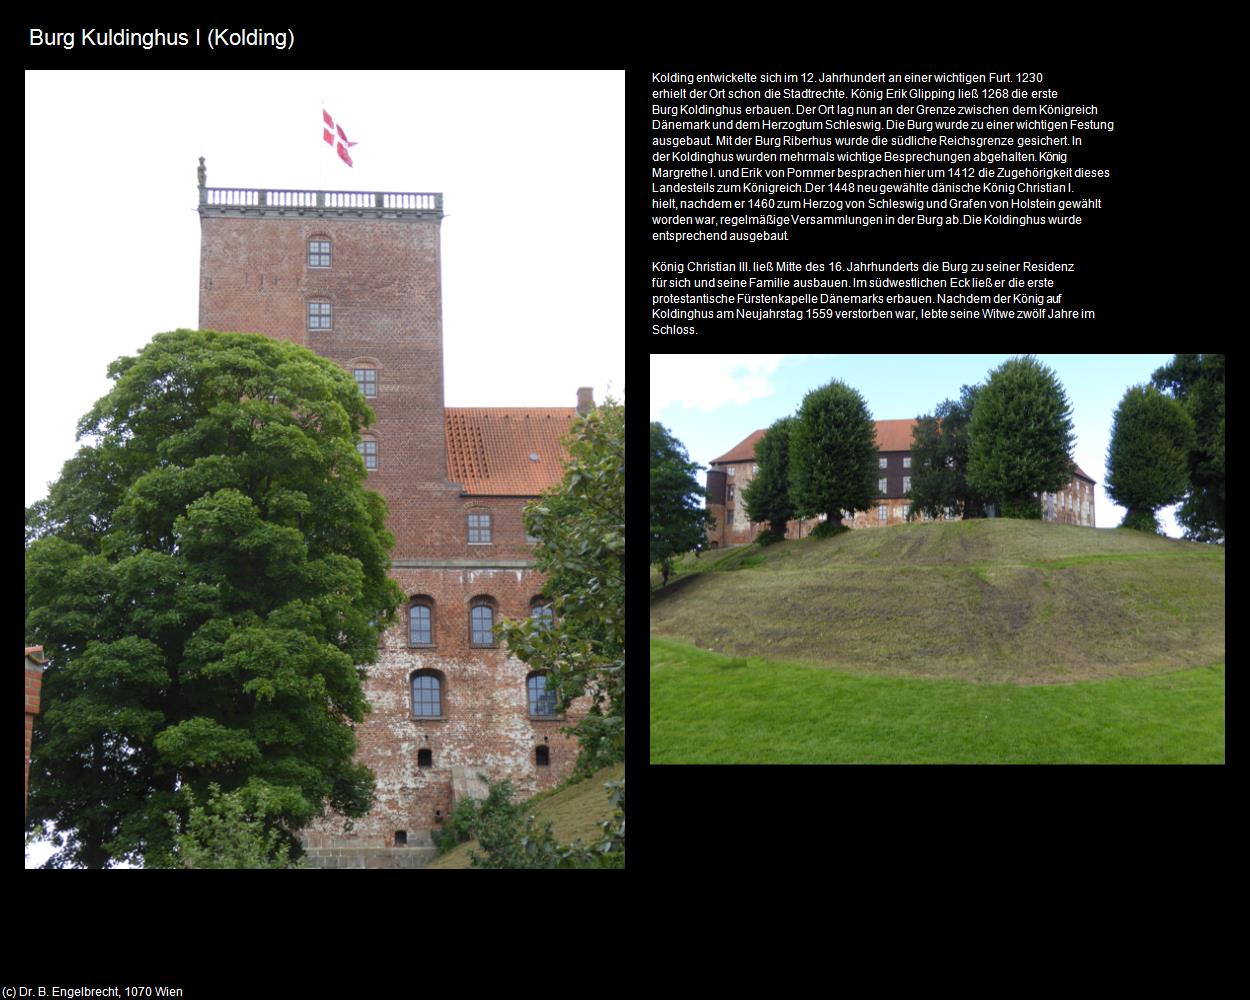 Burg Koldinghus I (Kolding) in Kulturatlas-REISE nach NORWEGEN